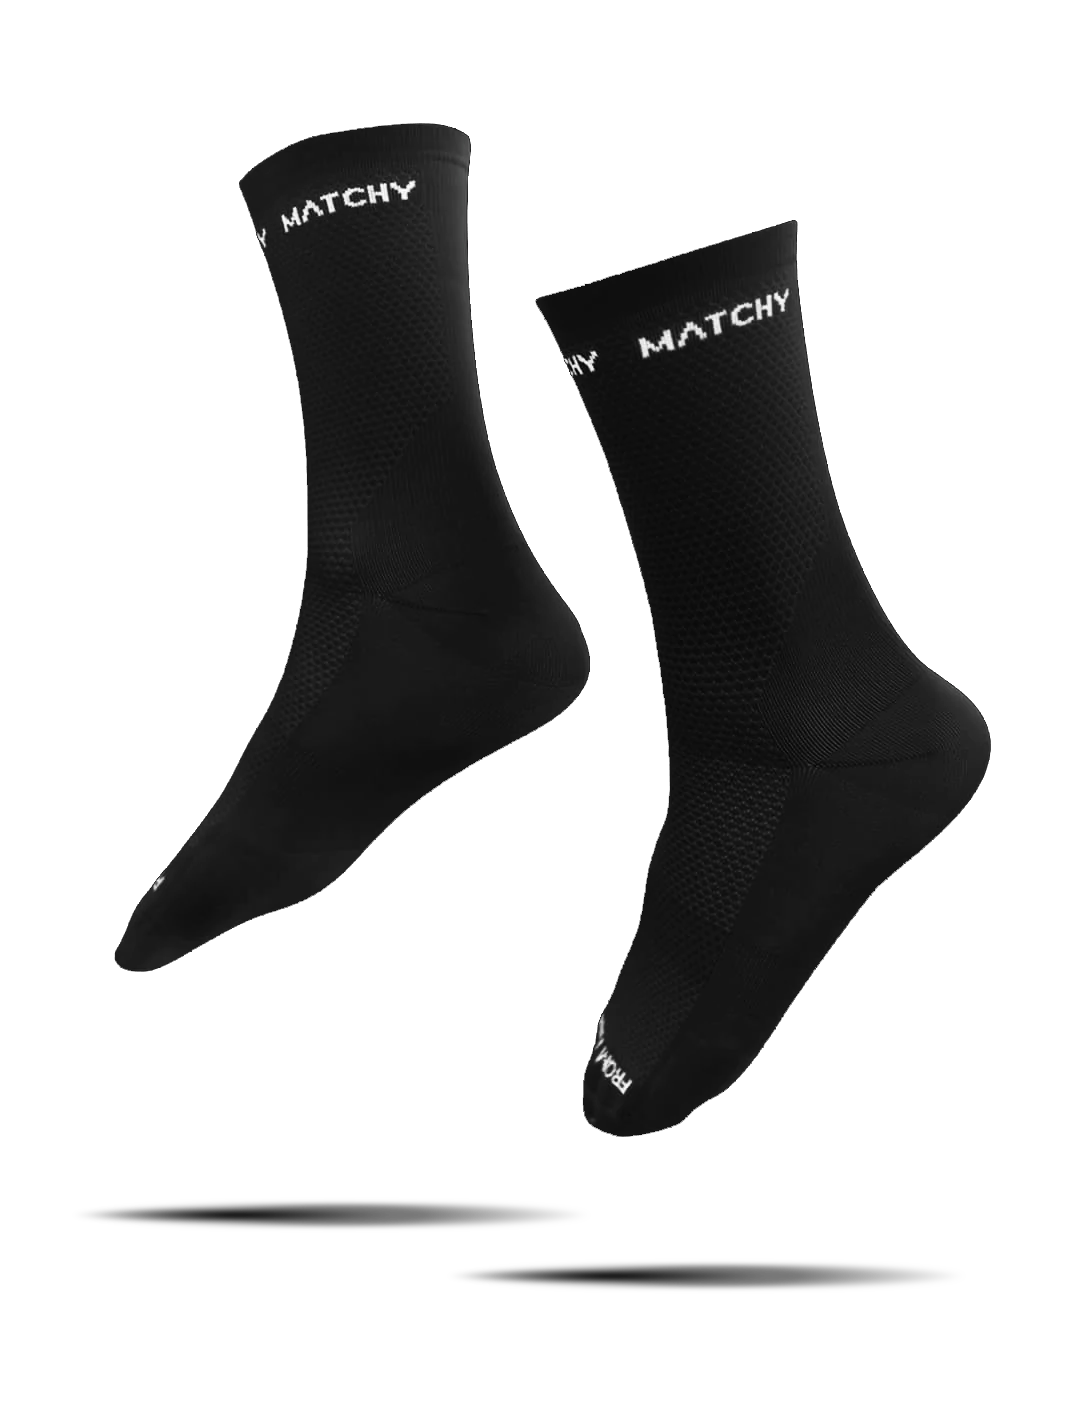 Socks - Matchy